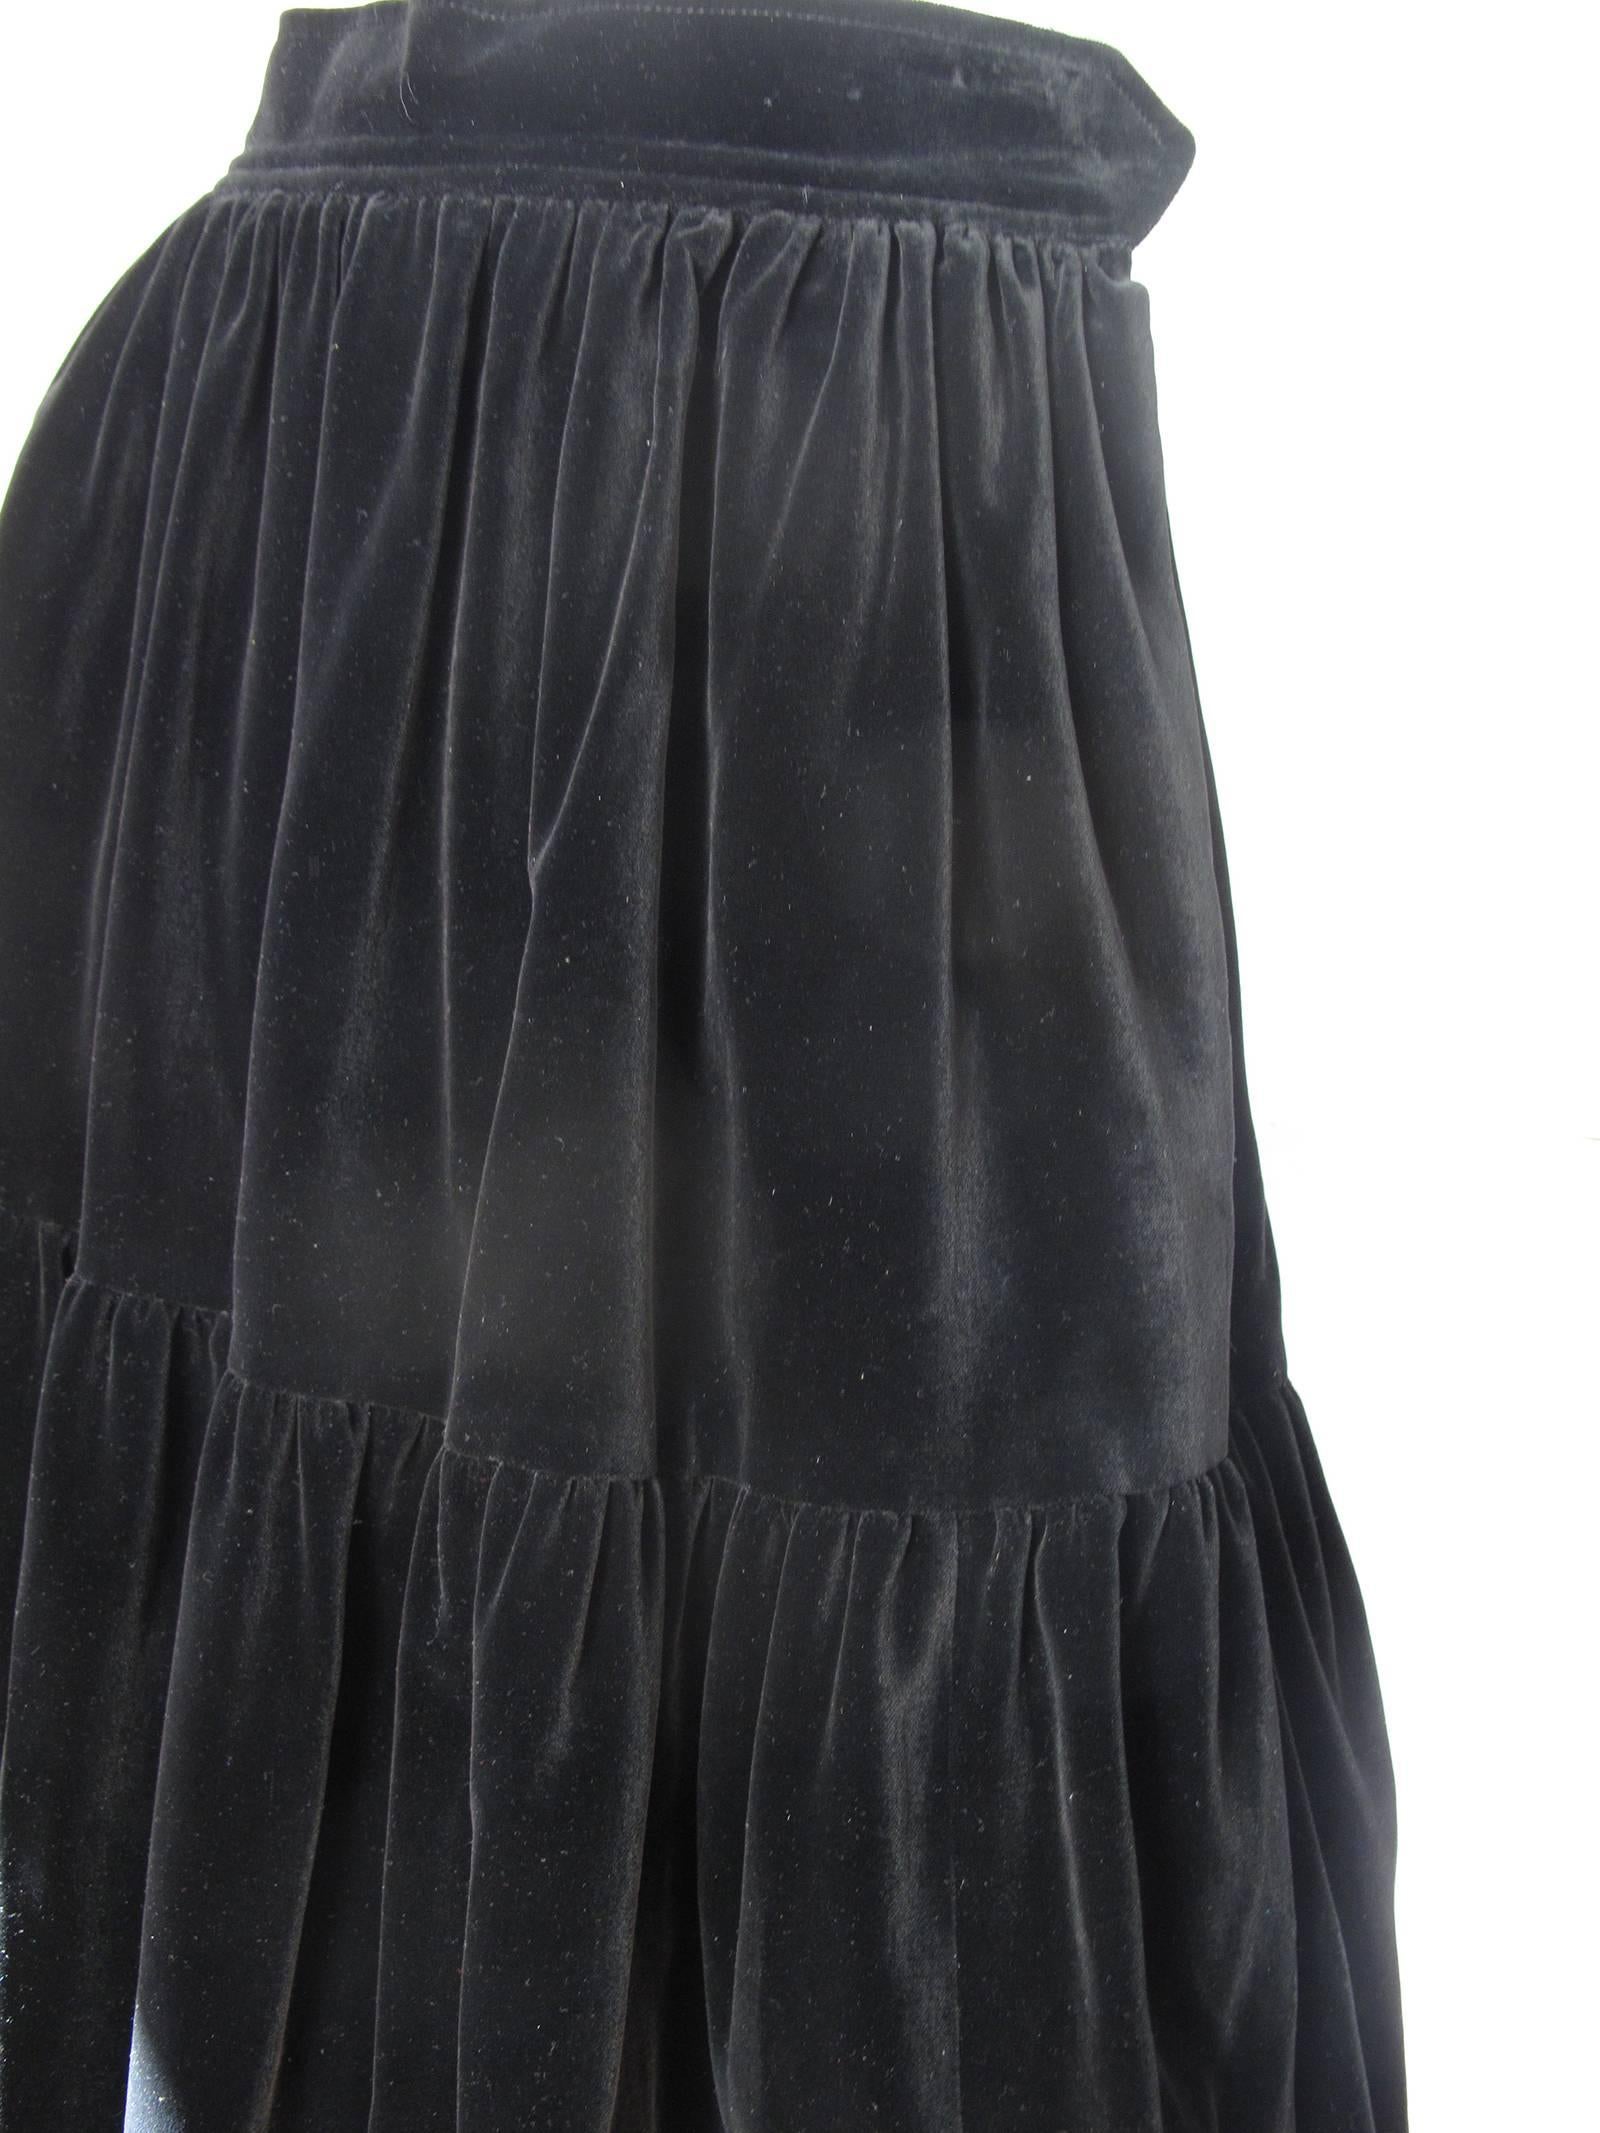 Yves Saint Laurent Rive Gauche Velvet Skirt, 1980s  - sale In Excellent Condition In Austin, TX